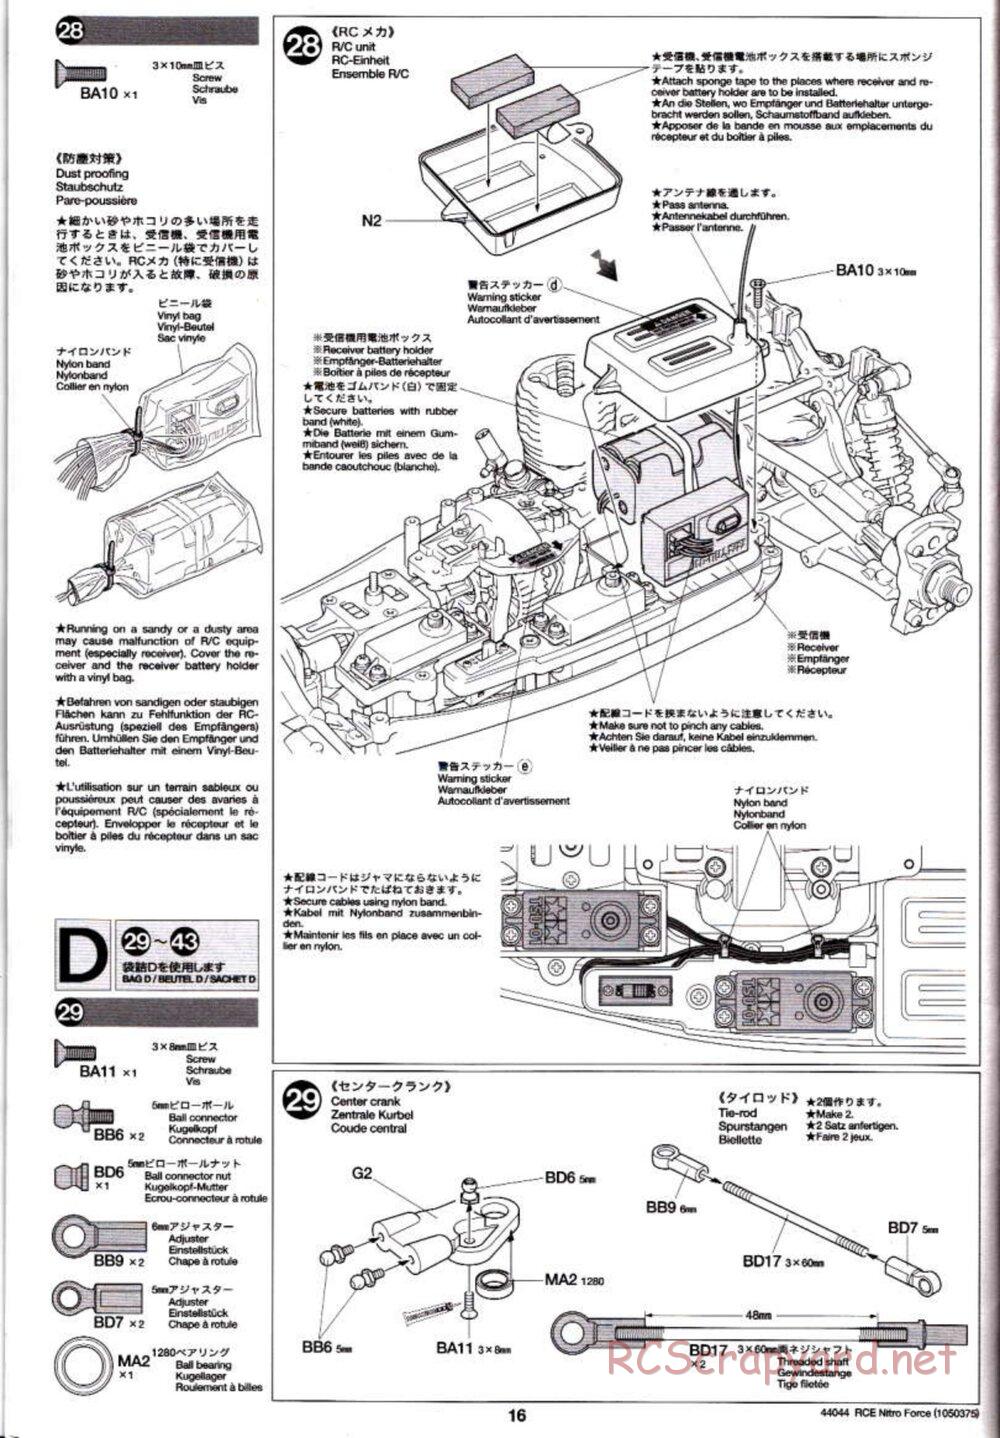 Tamiya - Nitro Force - NDF-01 Chassis - Manual - Page 16